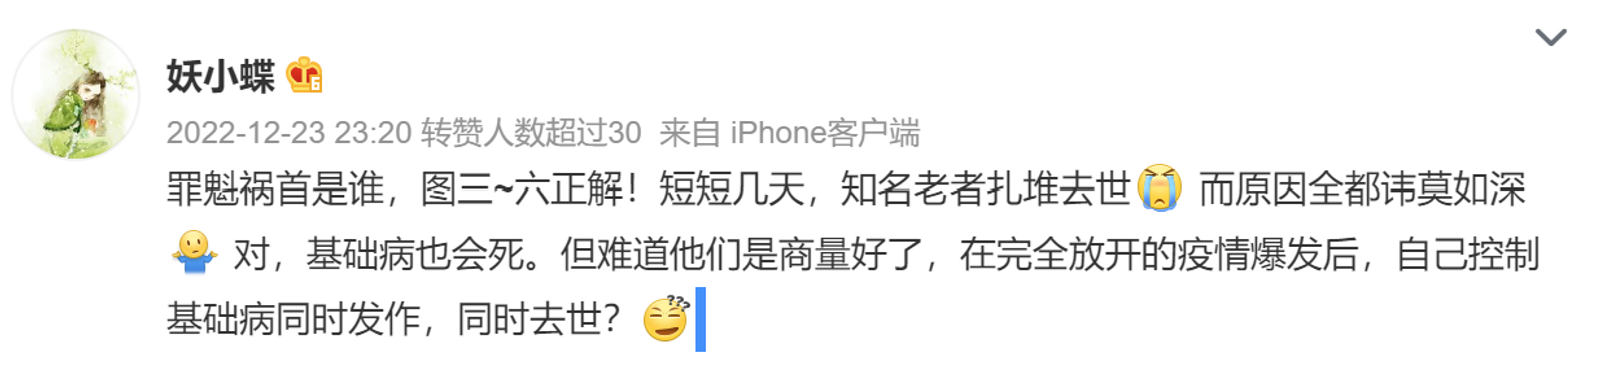 Weibo post on Ni Zhen death